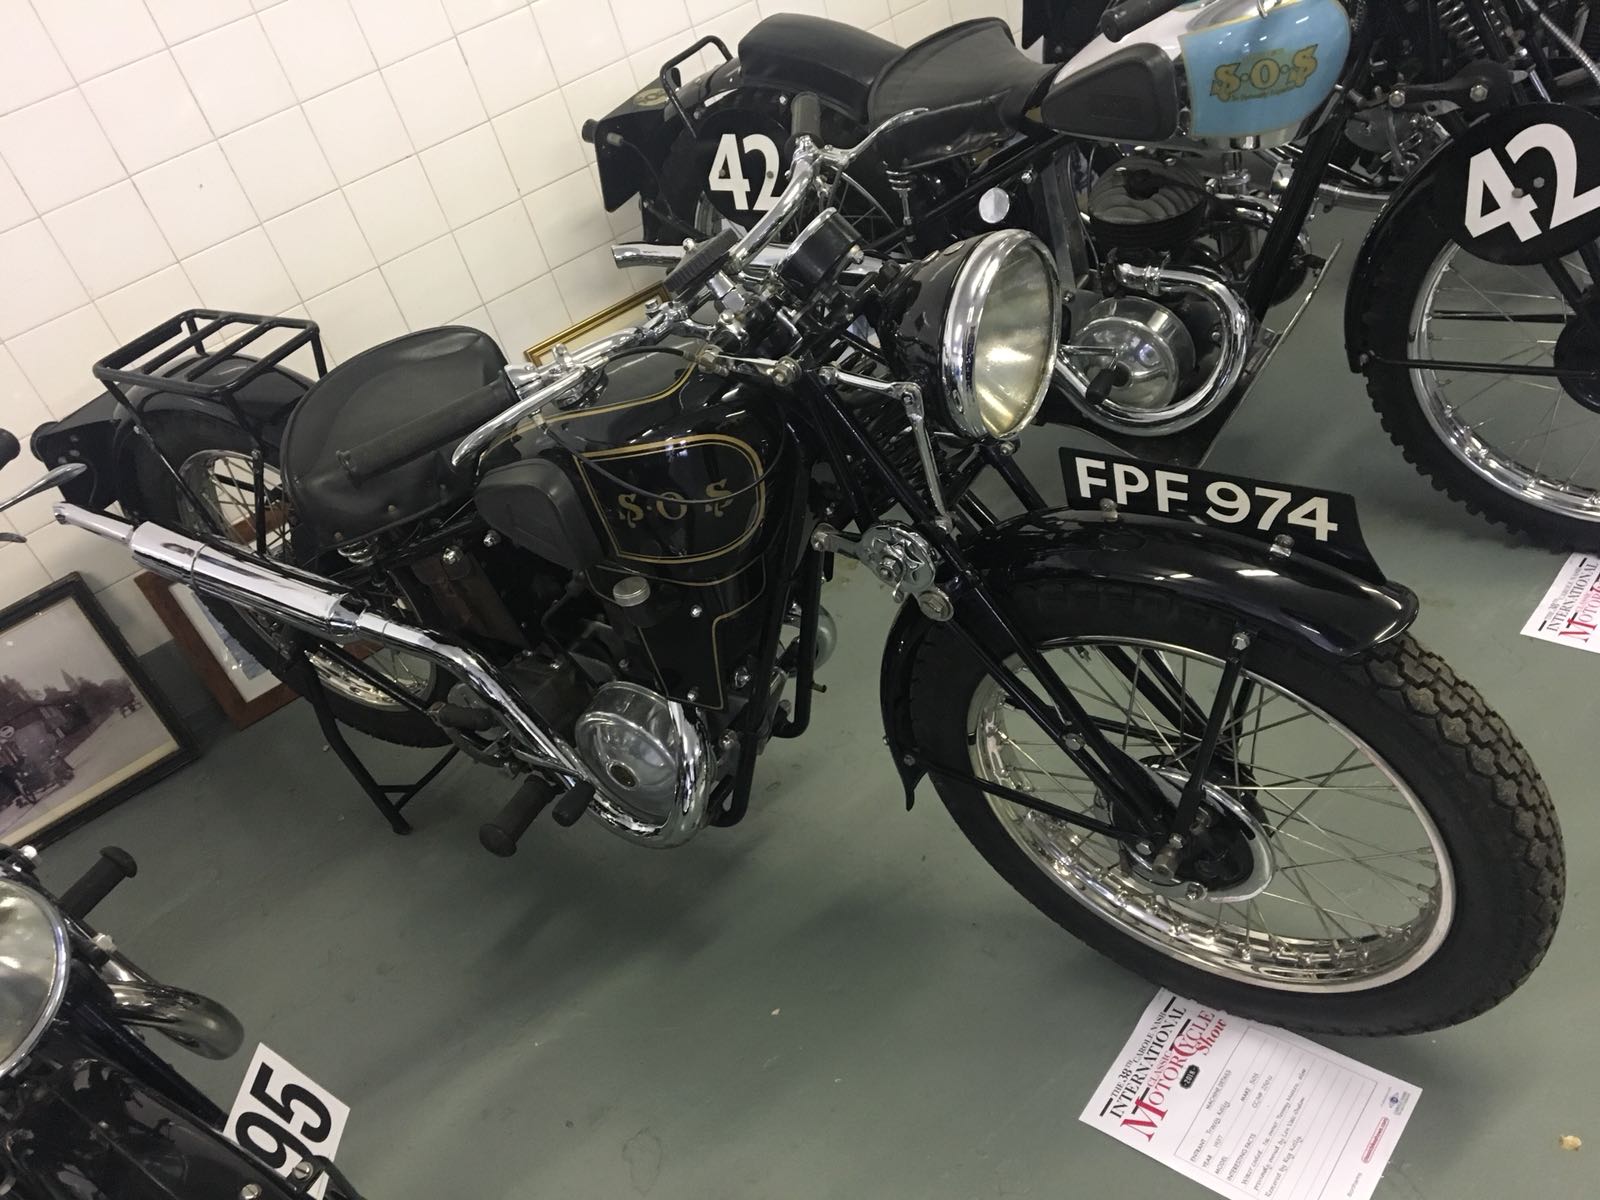 1937 SOS 250cc water cooled bike